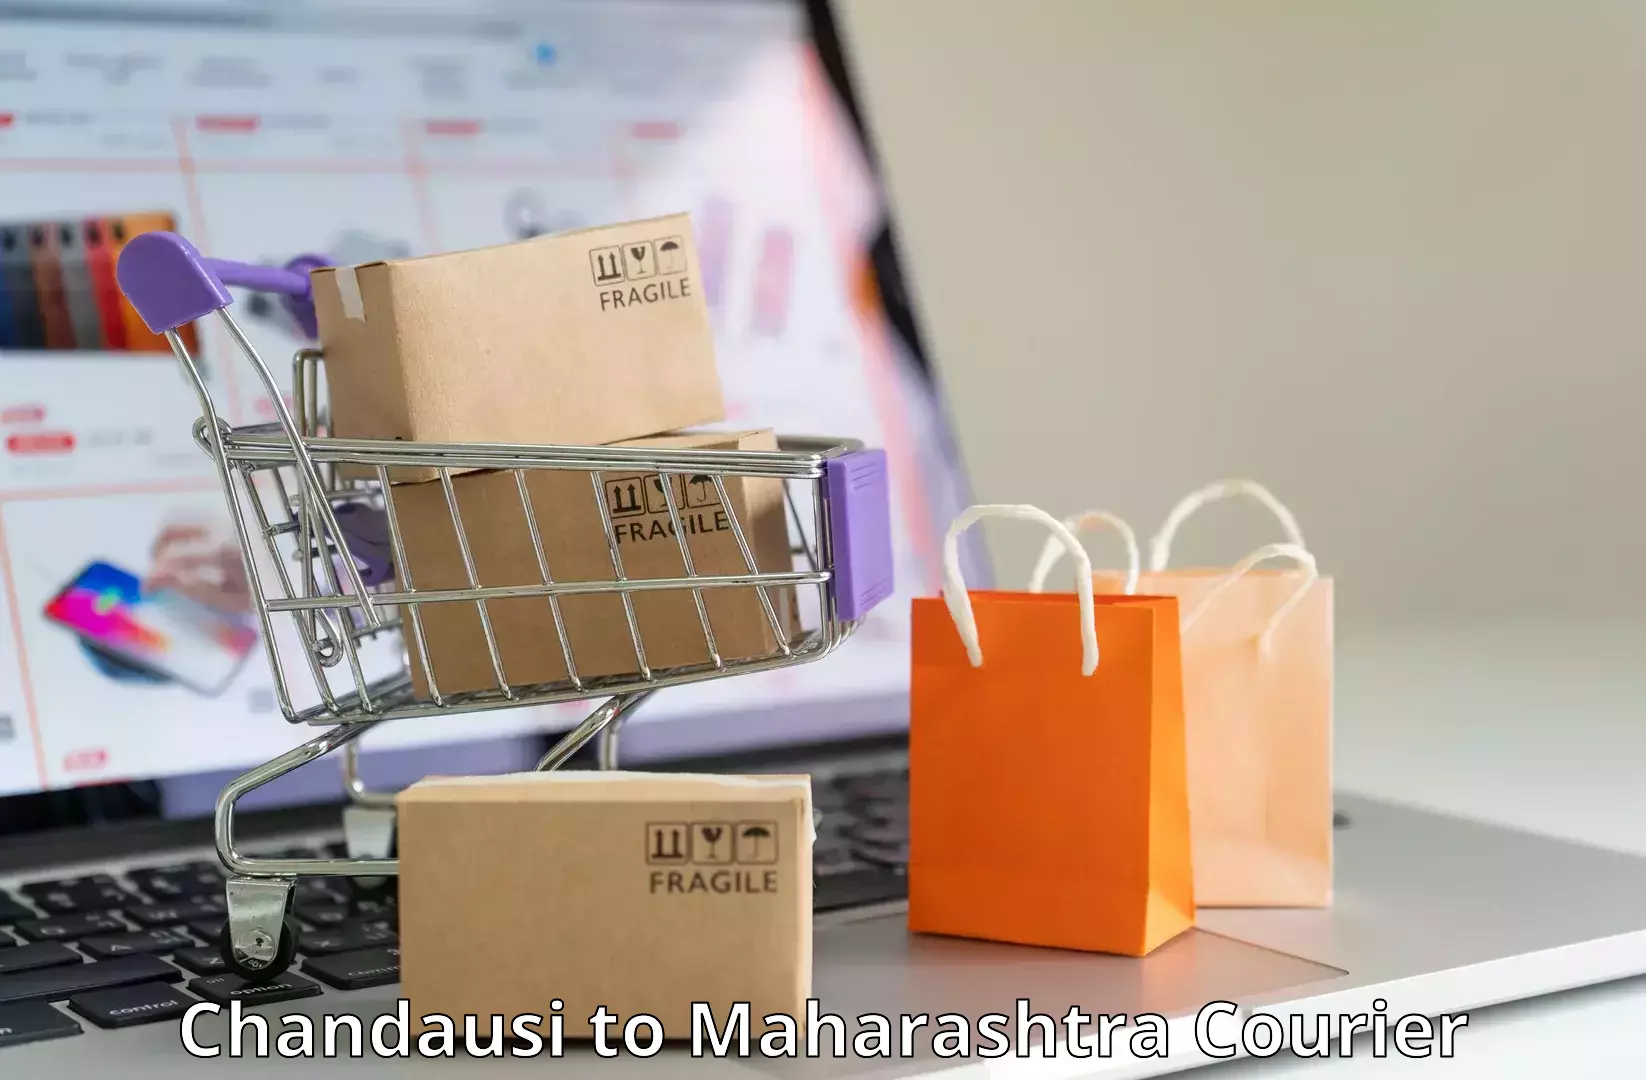 Customer-centric shipping Chandausi to Mahim